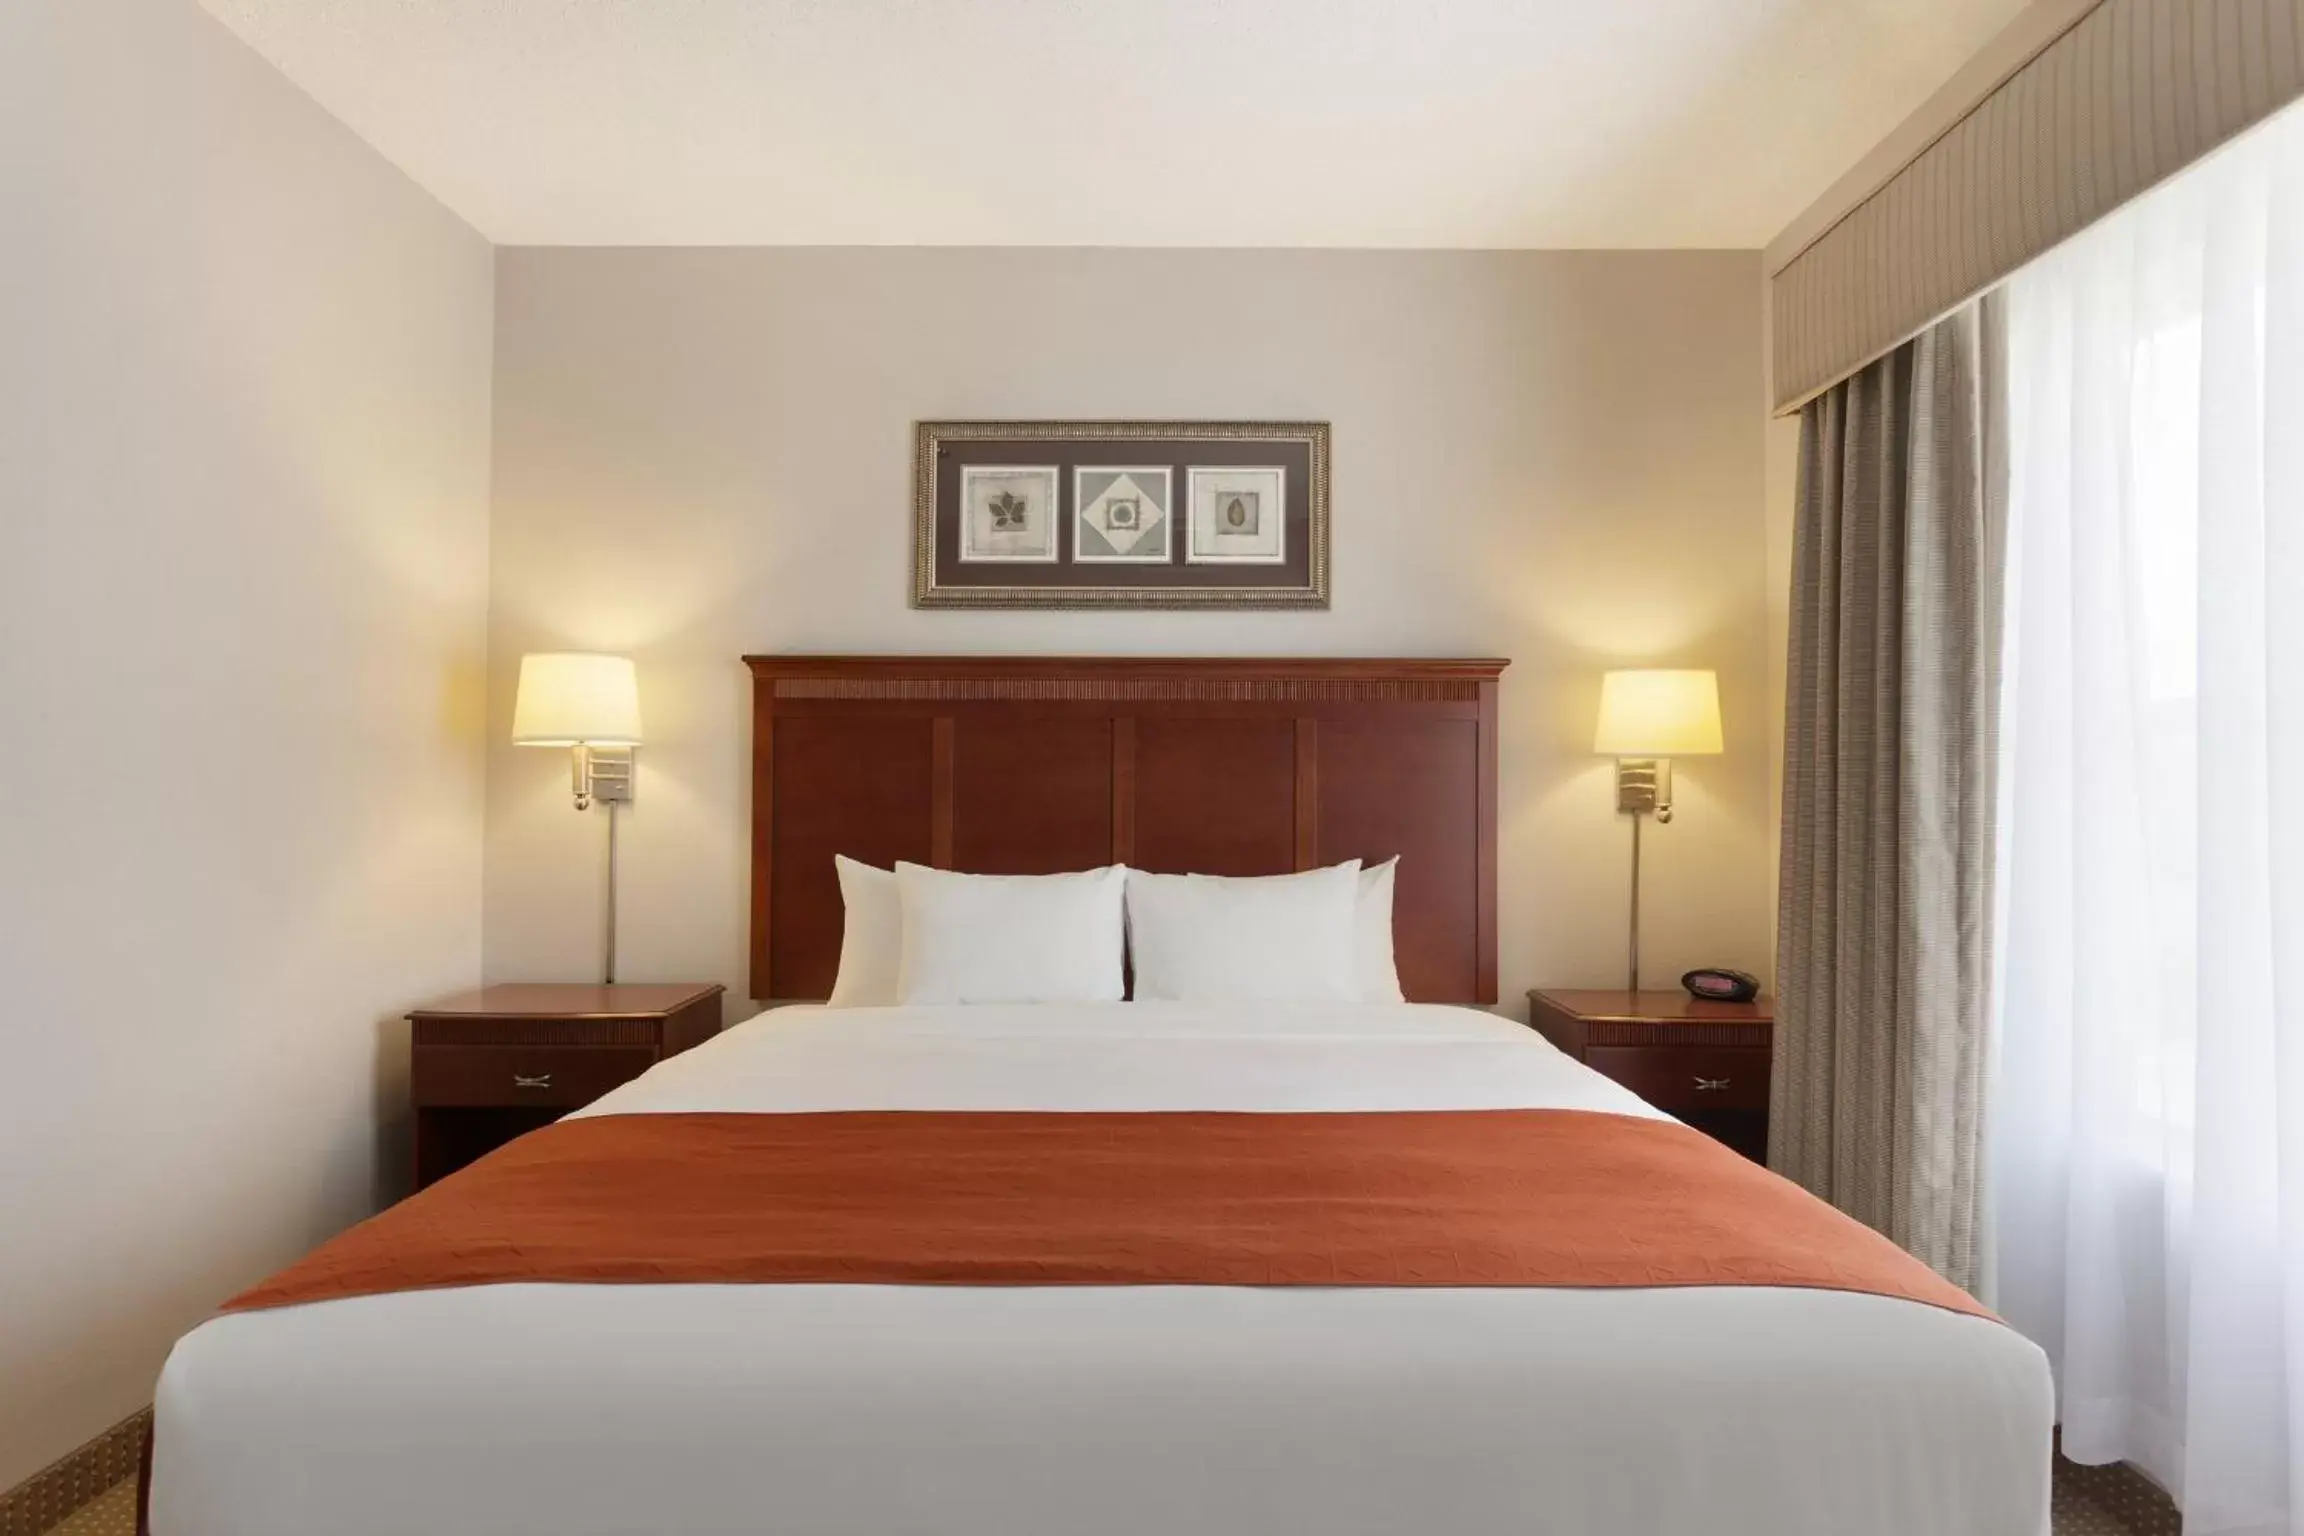 Bed, Room Photo in Country Inn & Suites by Radisson, Harrisonburg, VA